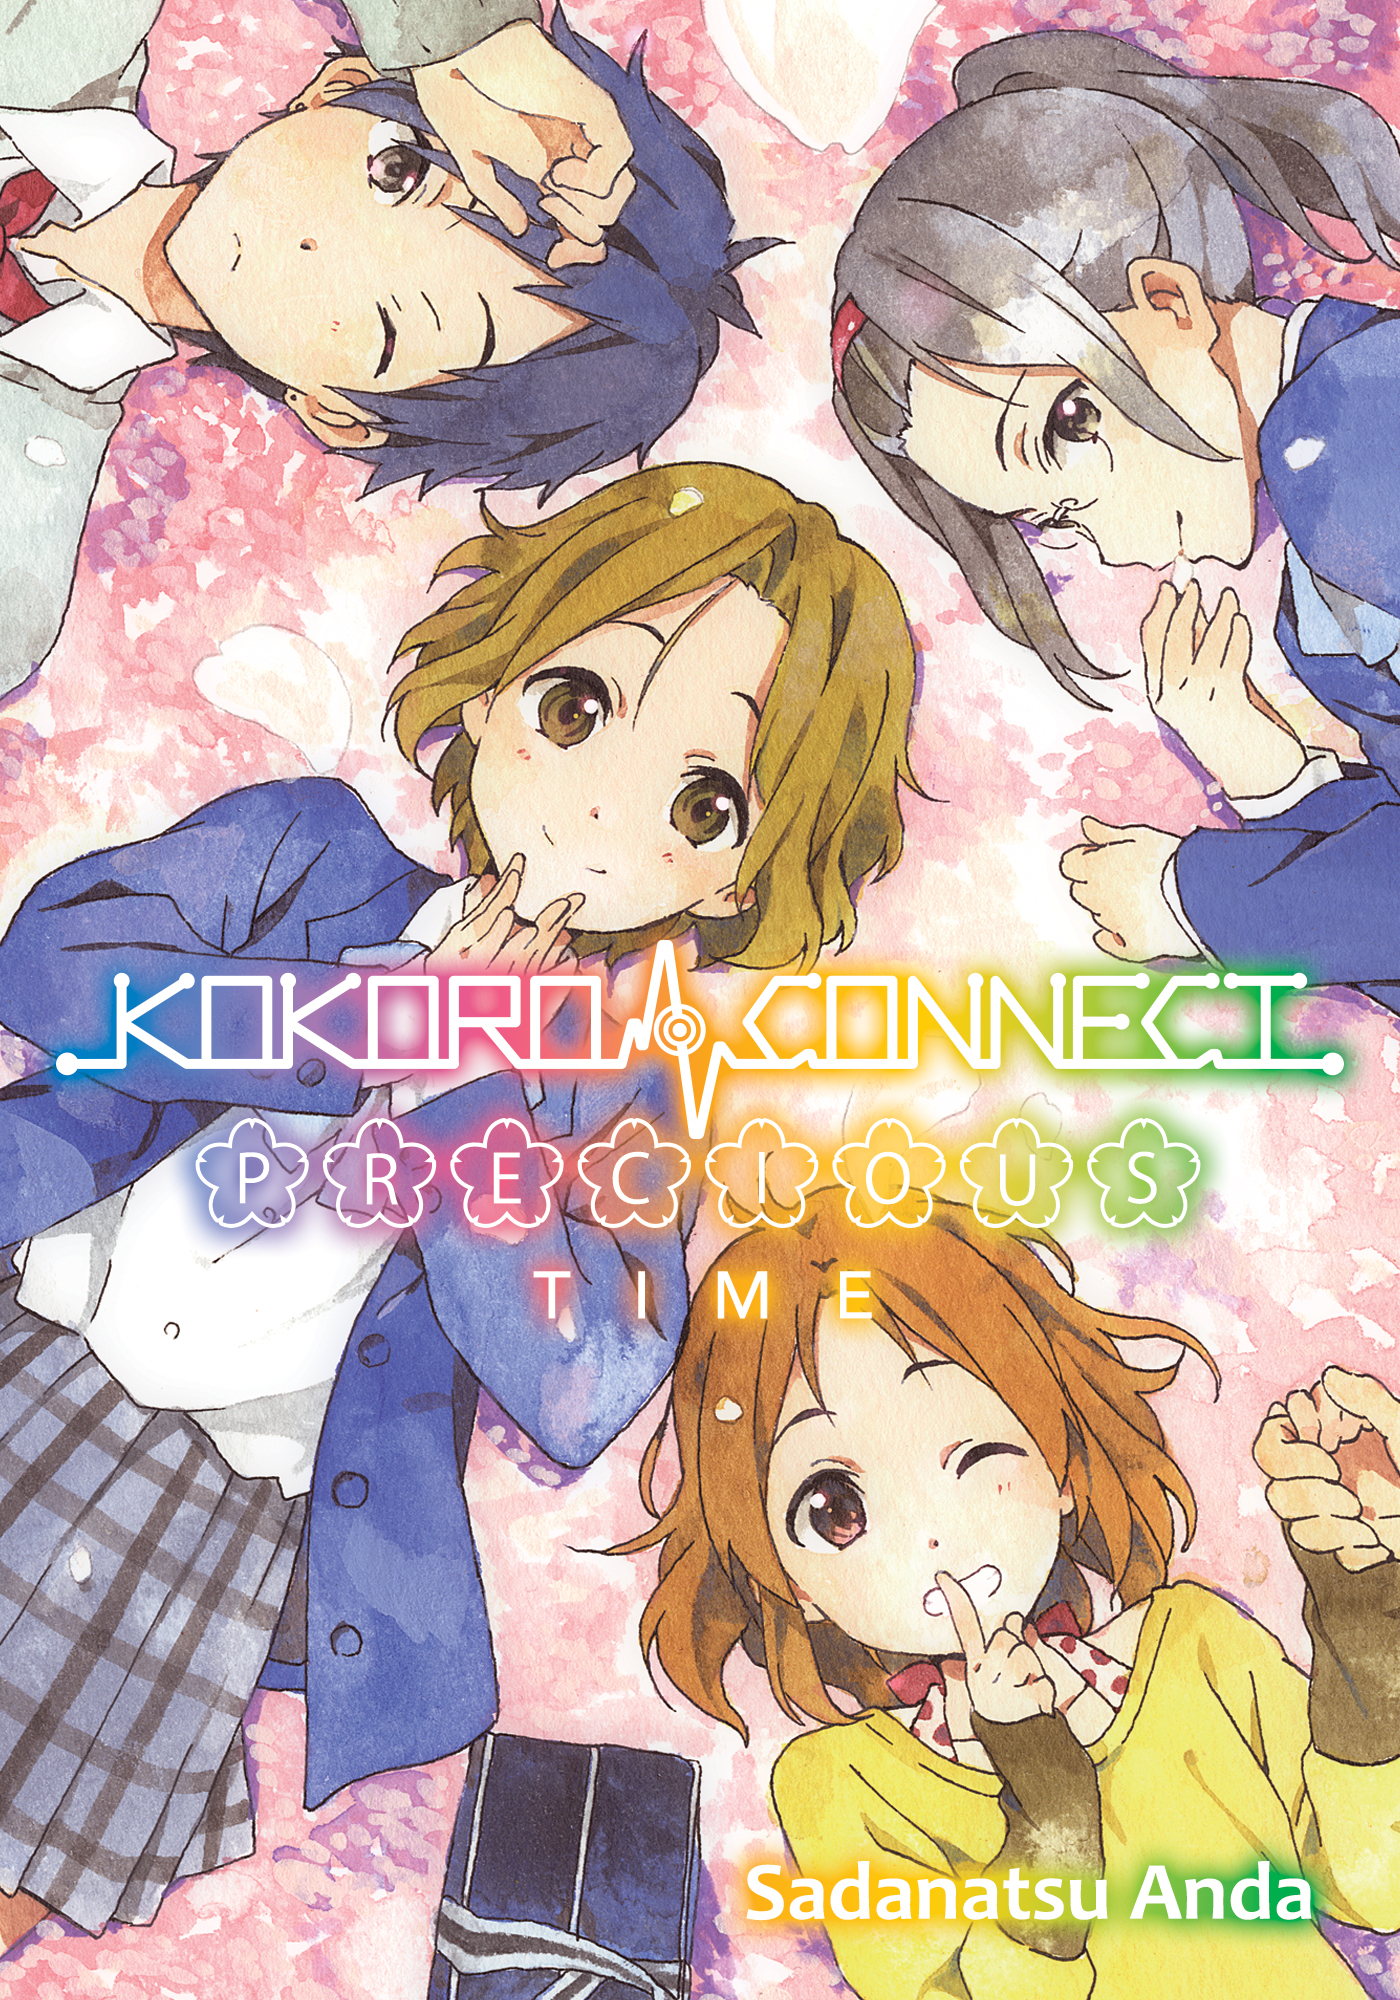 Kokoro Connect Volume 11 Review * Anime UK News.